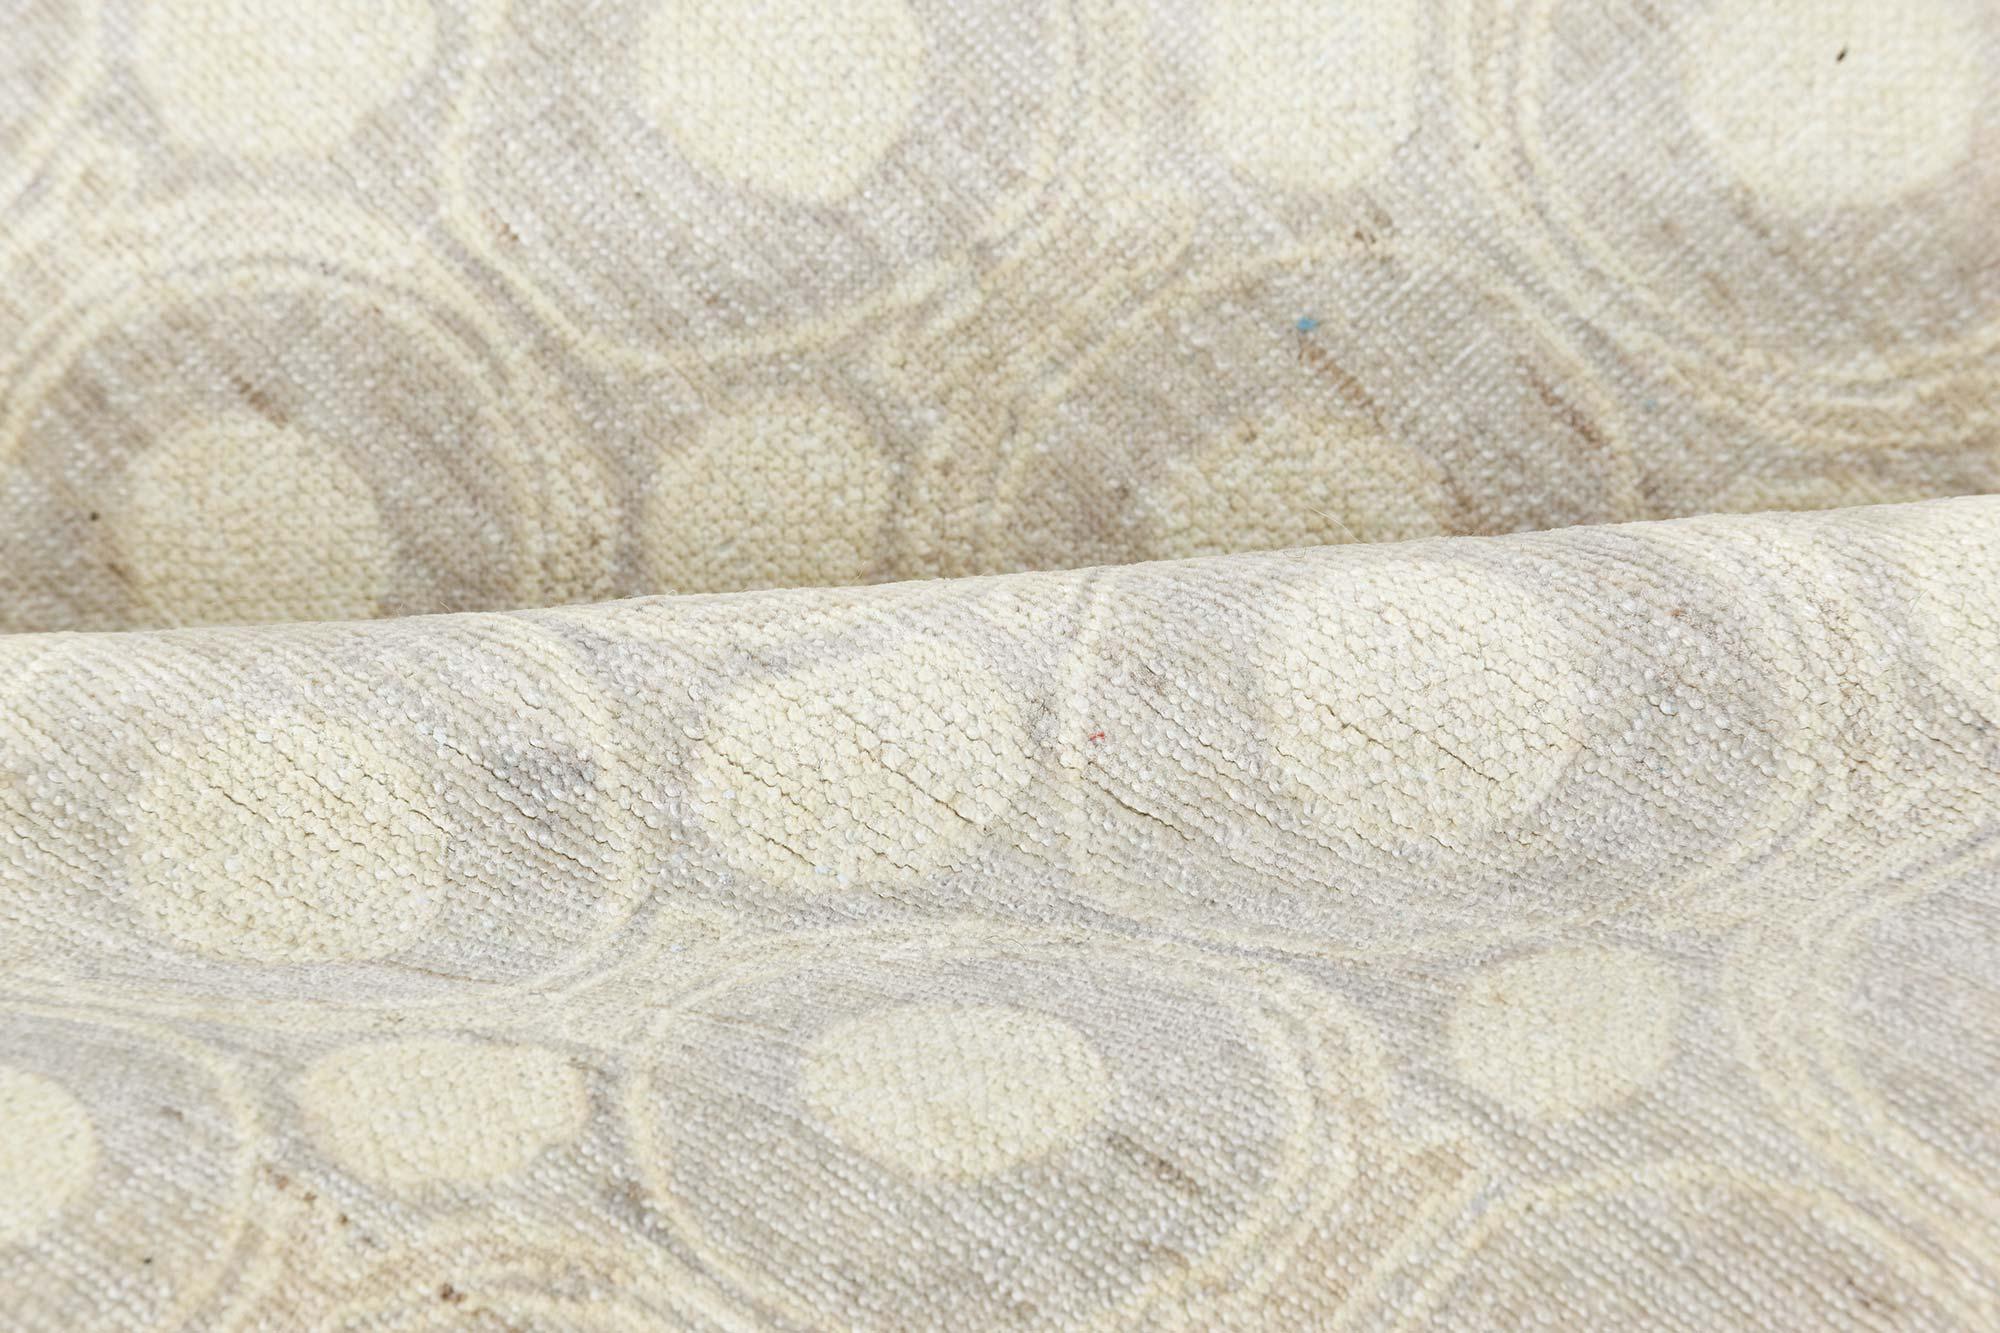 Contemporary circular design handmade silk rug by Doris Leslie Blau.
Size: 9.9